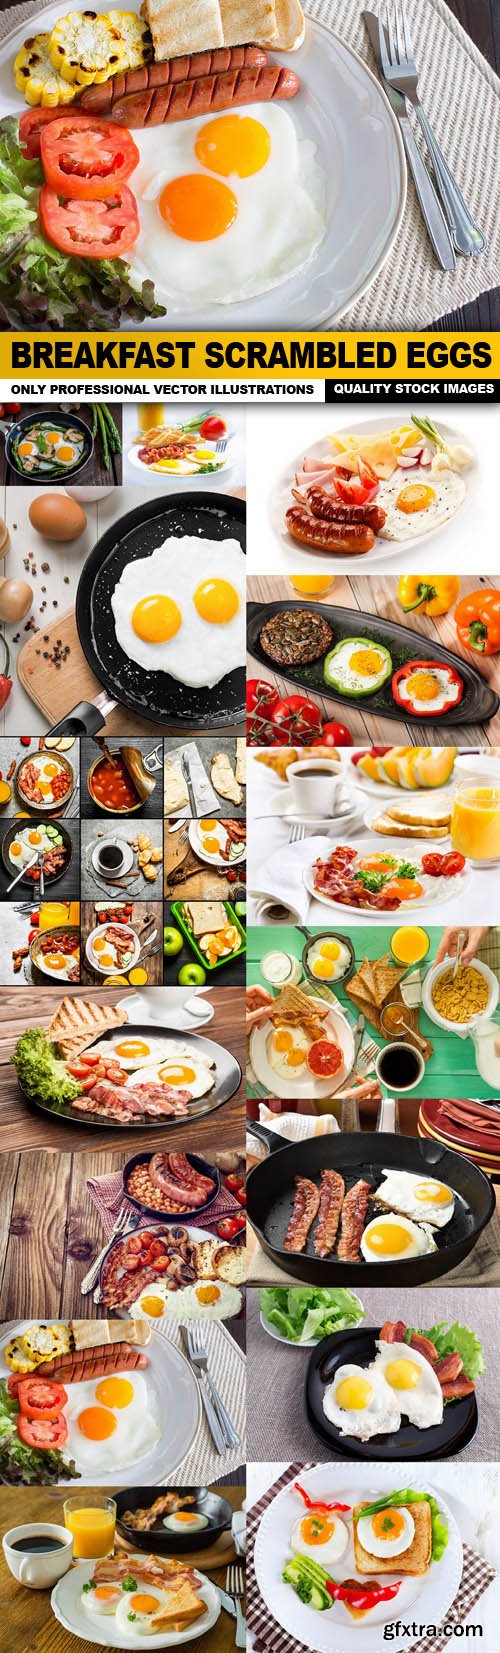 Breakfast Scrambled Eggs - 15 HQ Images